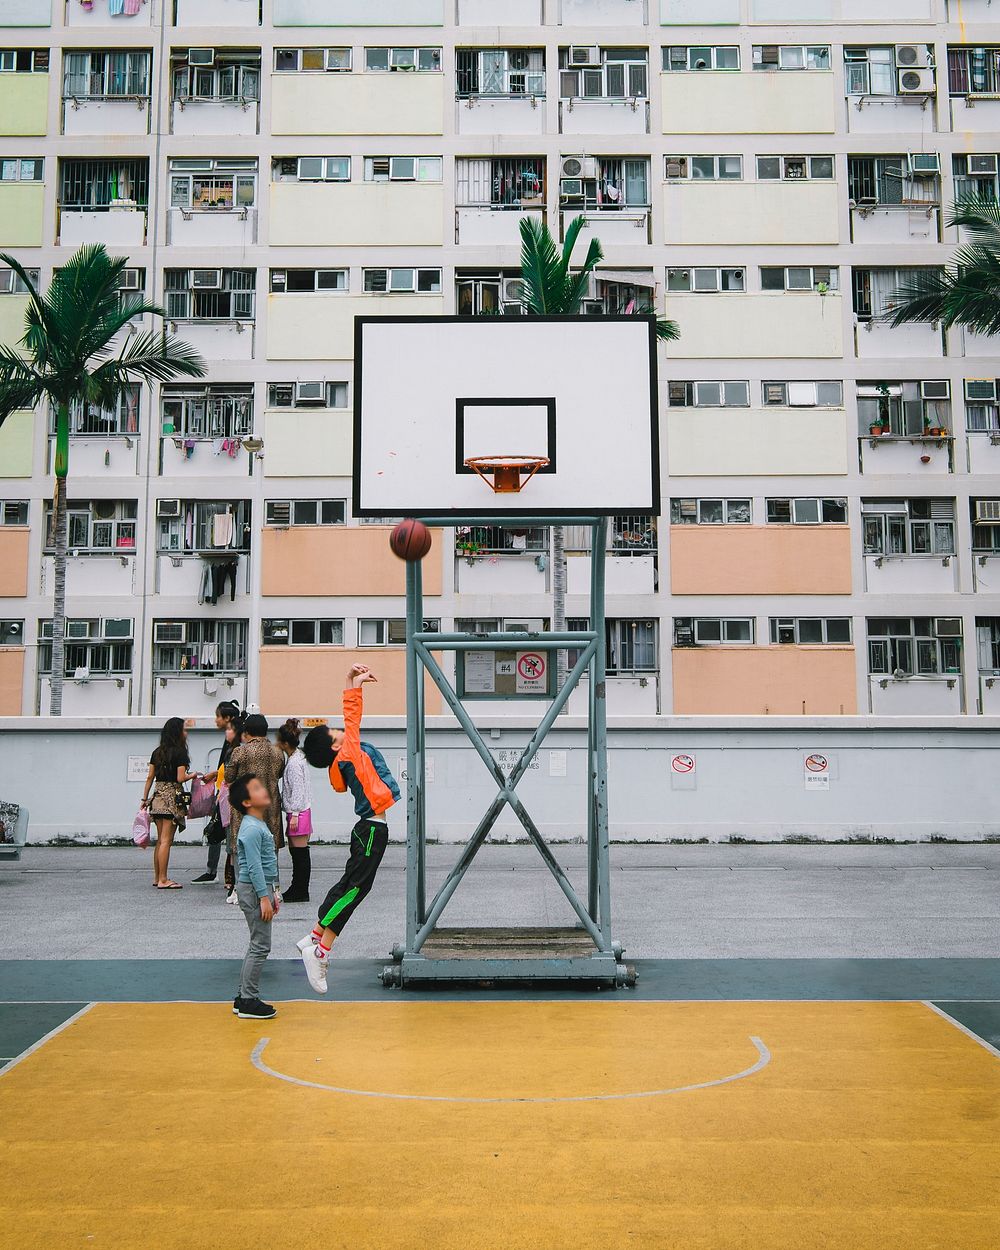 Young boy shooting a basketball into a hoop. 10 MARCH, 2019 - HONG KONG